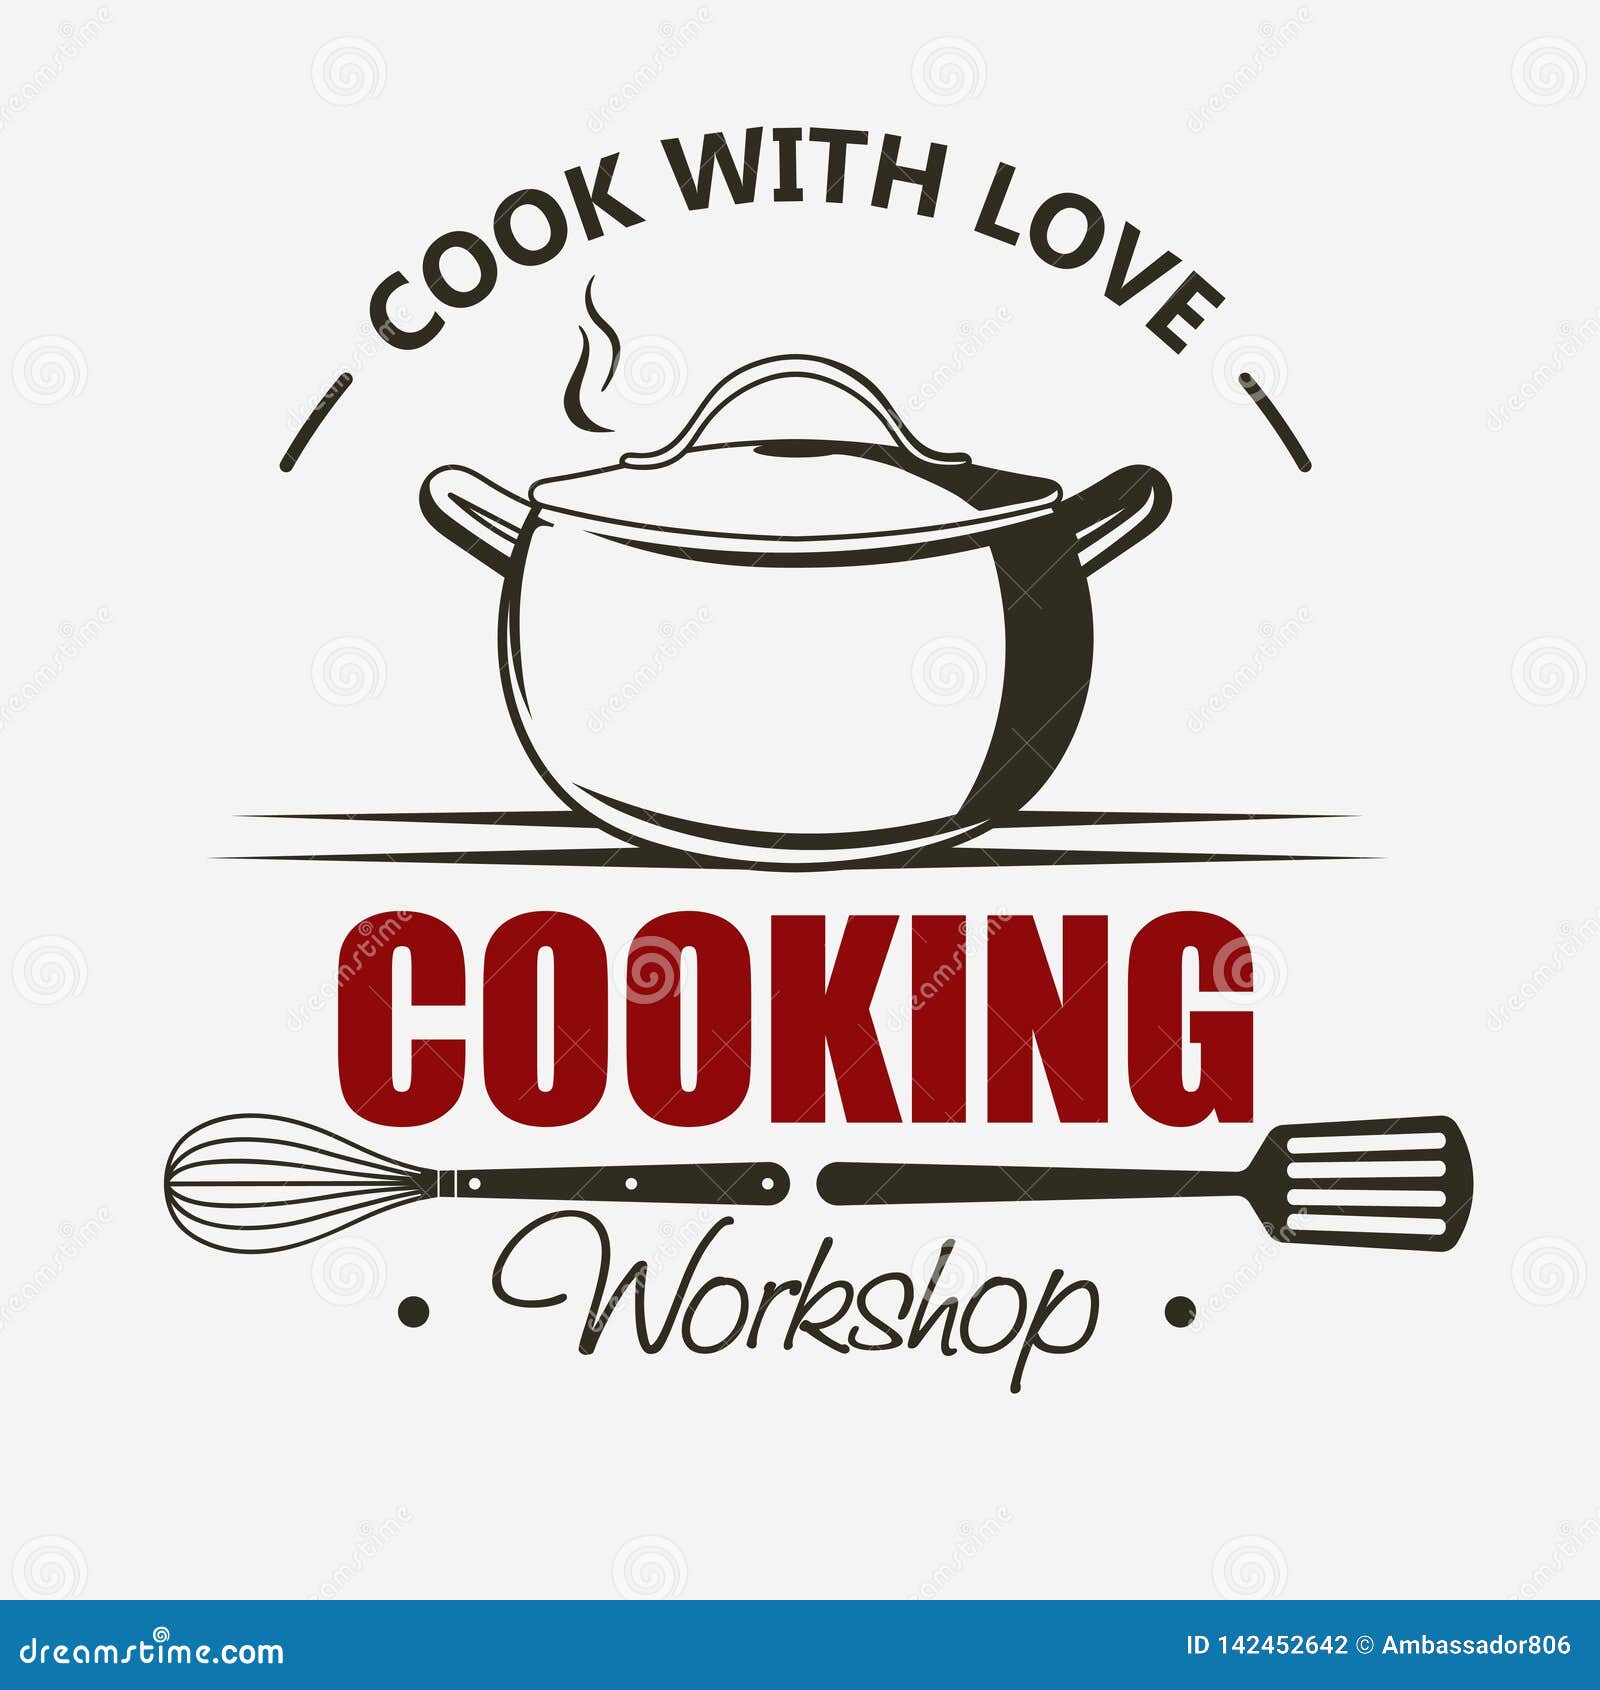 https://thumbs.dreamstime.com/z/cooking-symbol-emblem-set-saucepan-cook-food-masterclass-labels-template-vector-culinary-school-workshop-chef-kitchenware-142452642.jpg